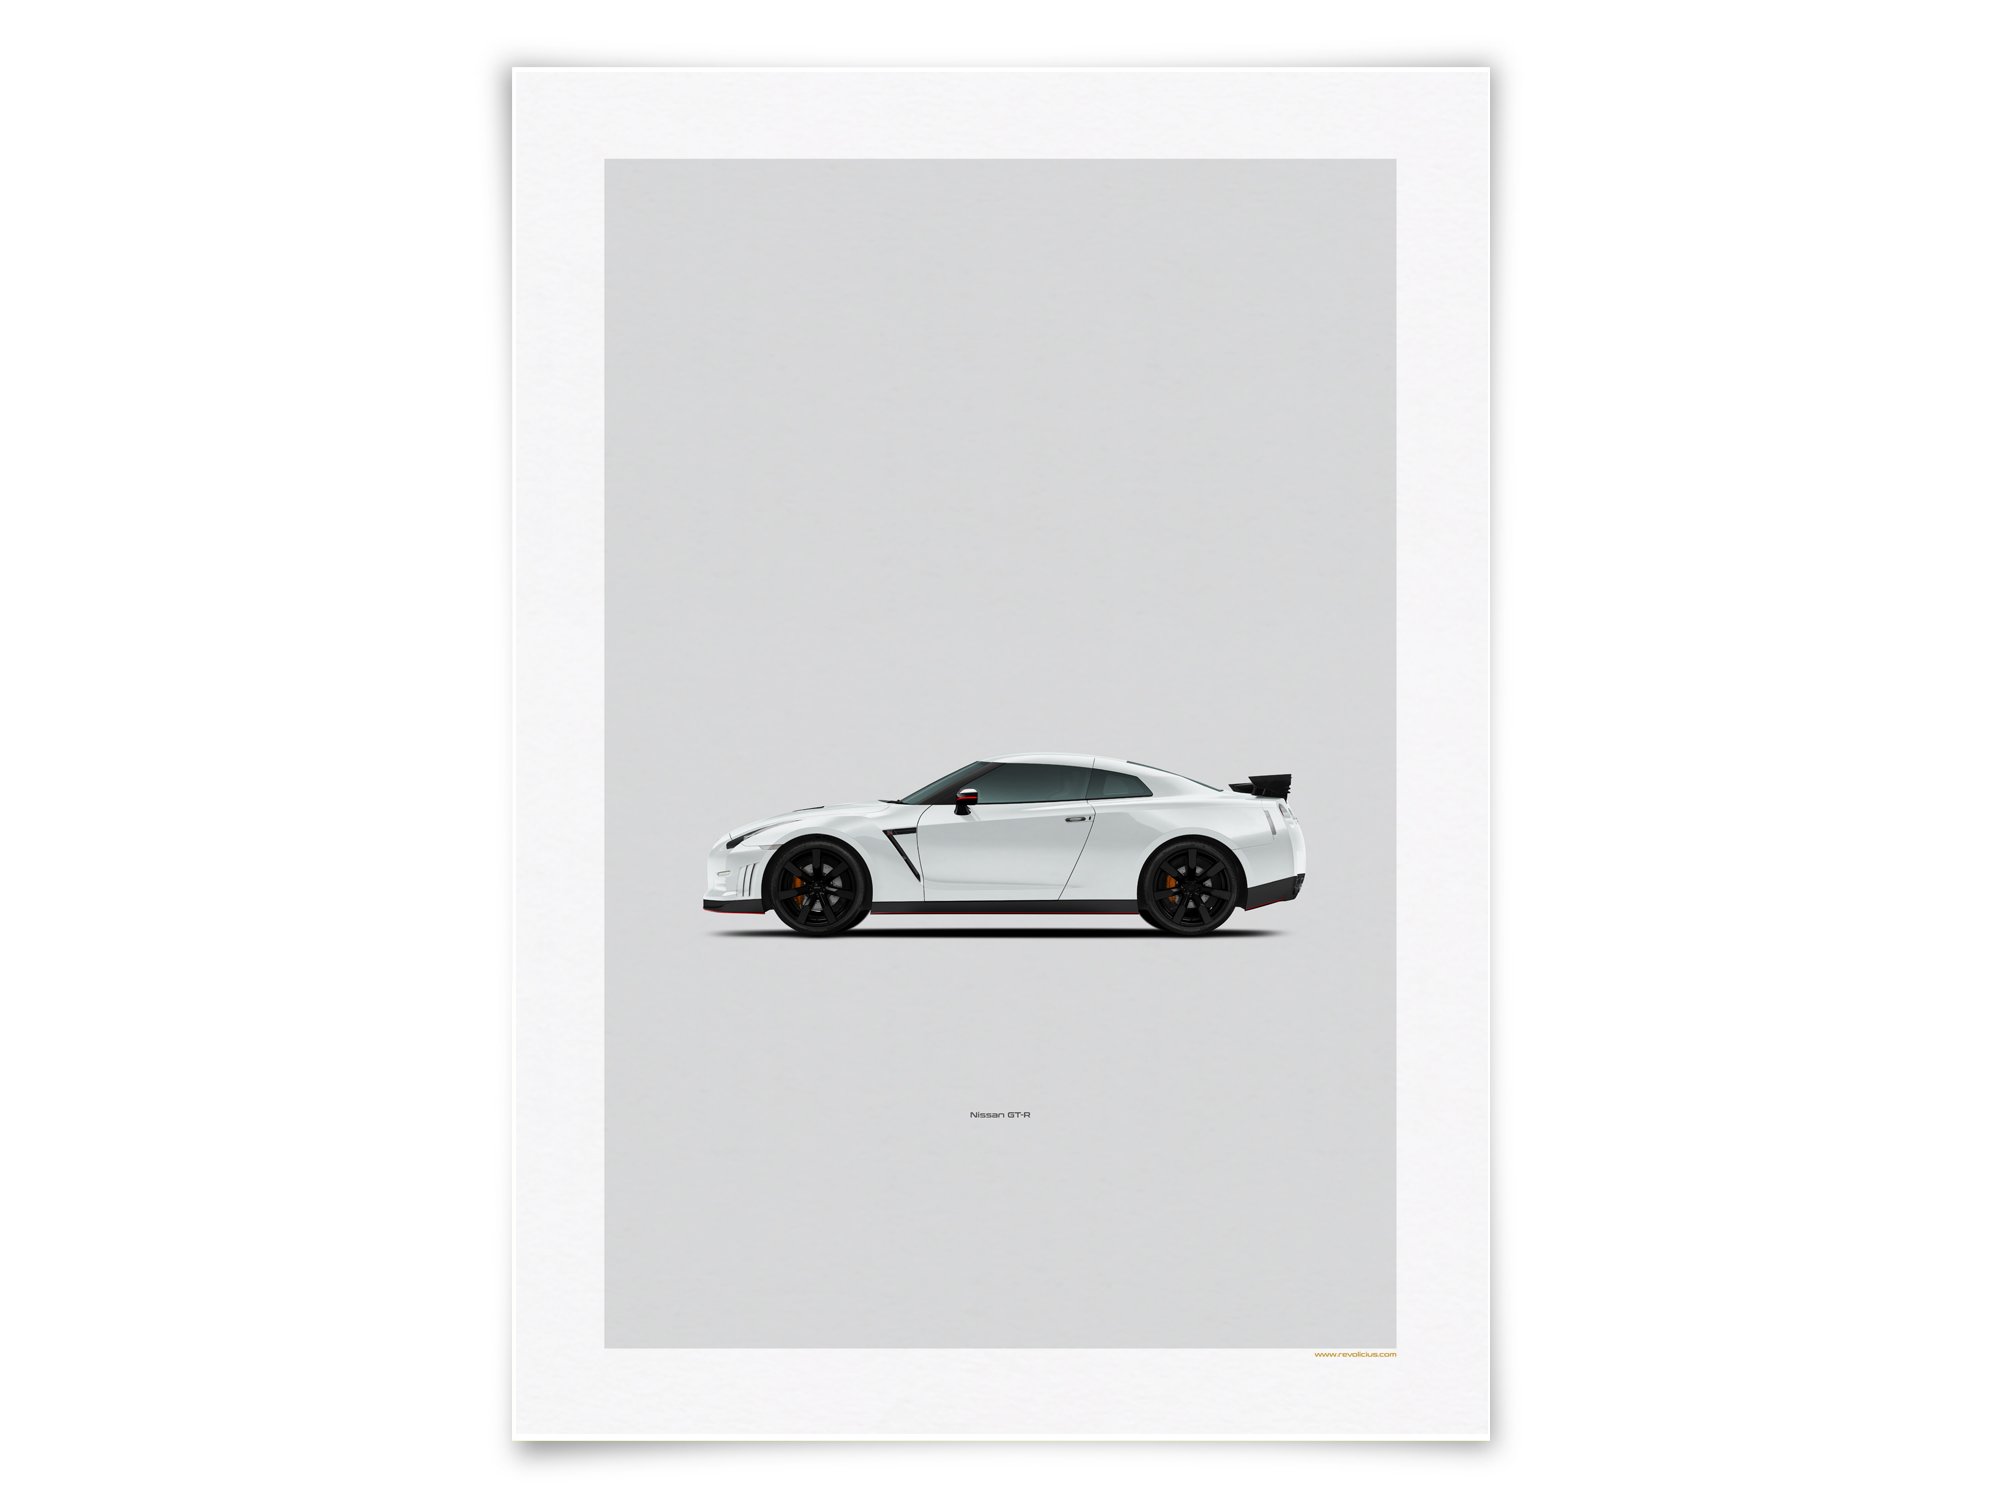 Nissan GT-R - Car poster, car illustration, car print